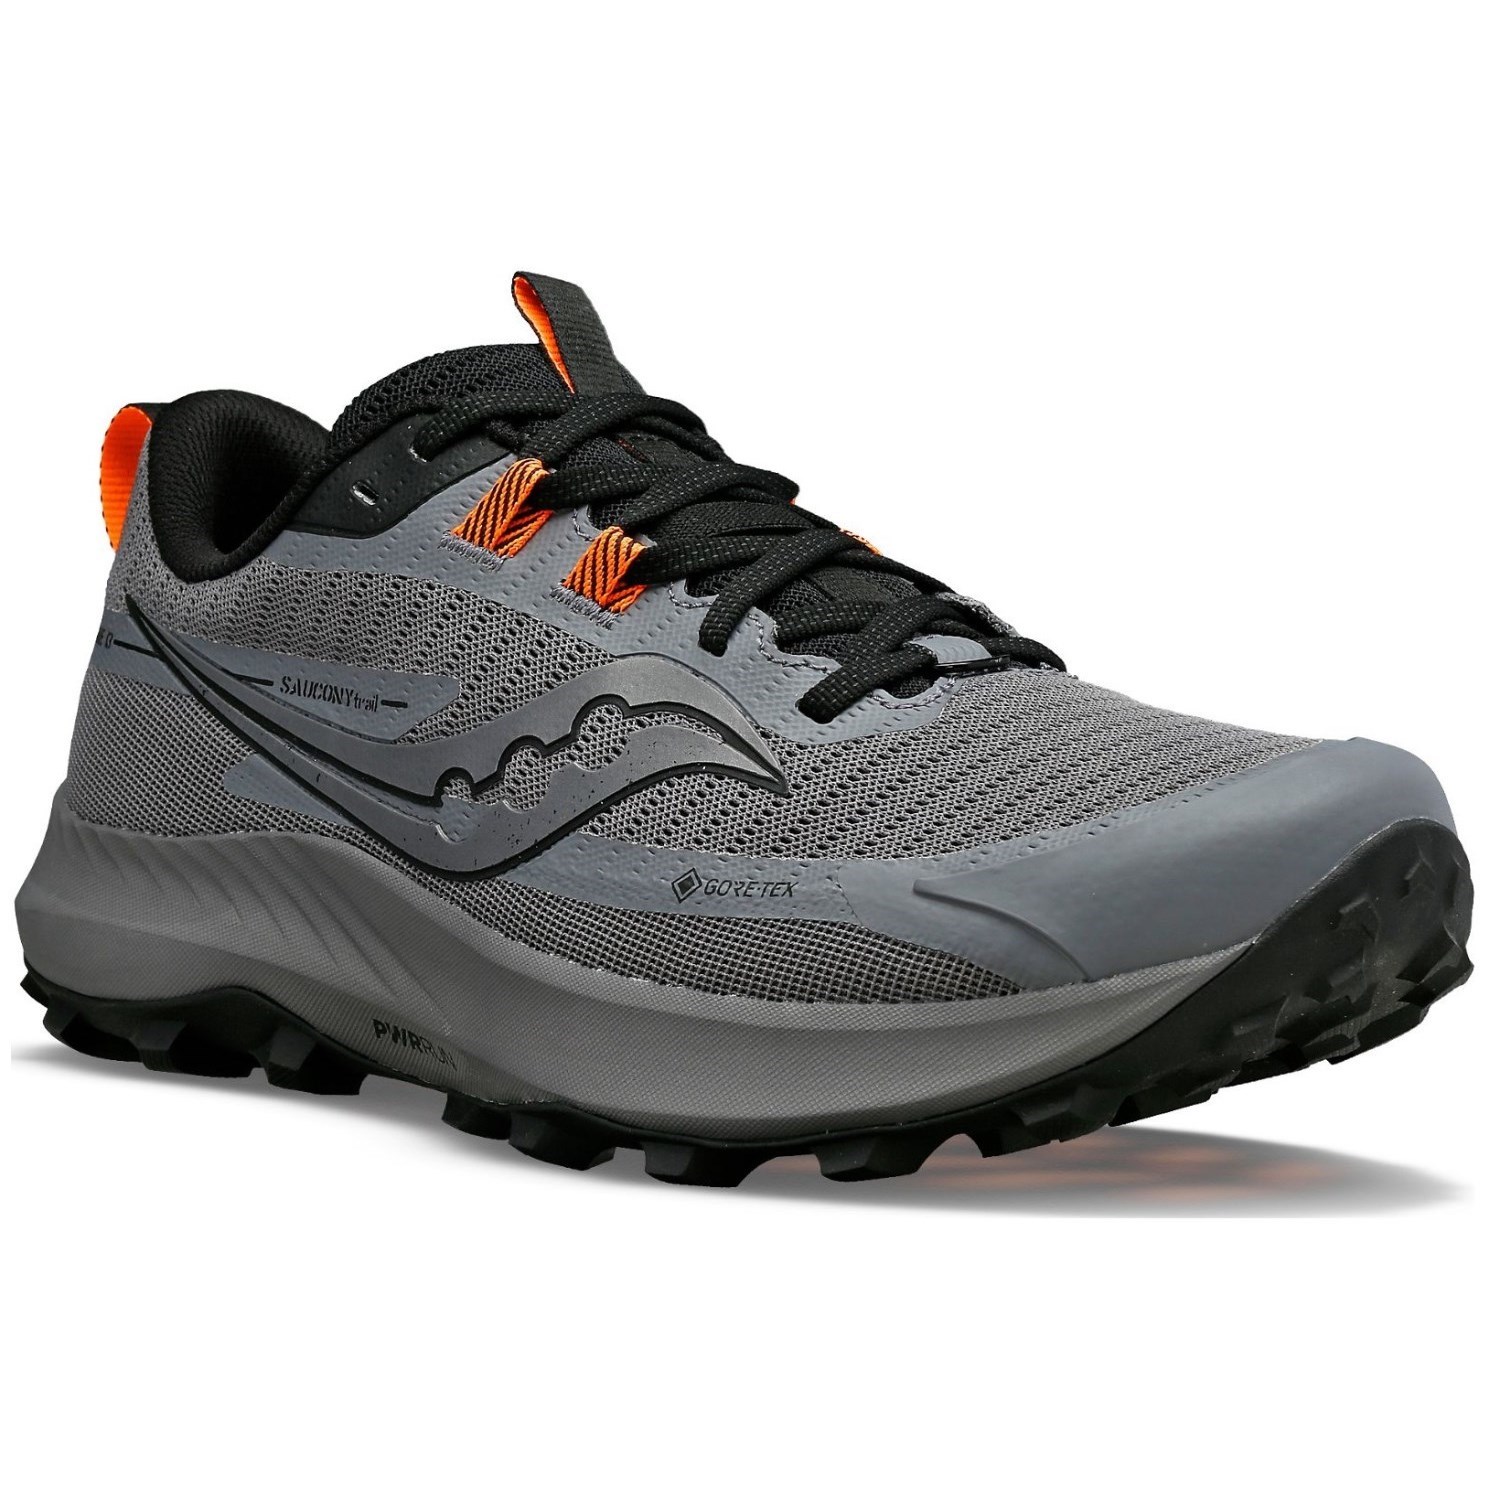 Saucony Peregrine 13 GTX - Mens Trail Running Shoes - Gravel/Black ...